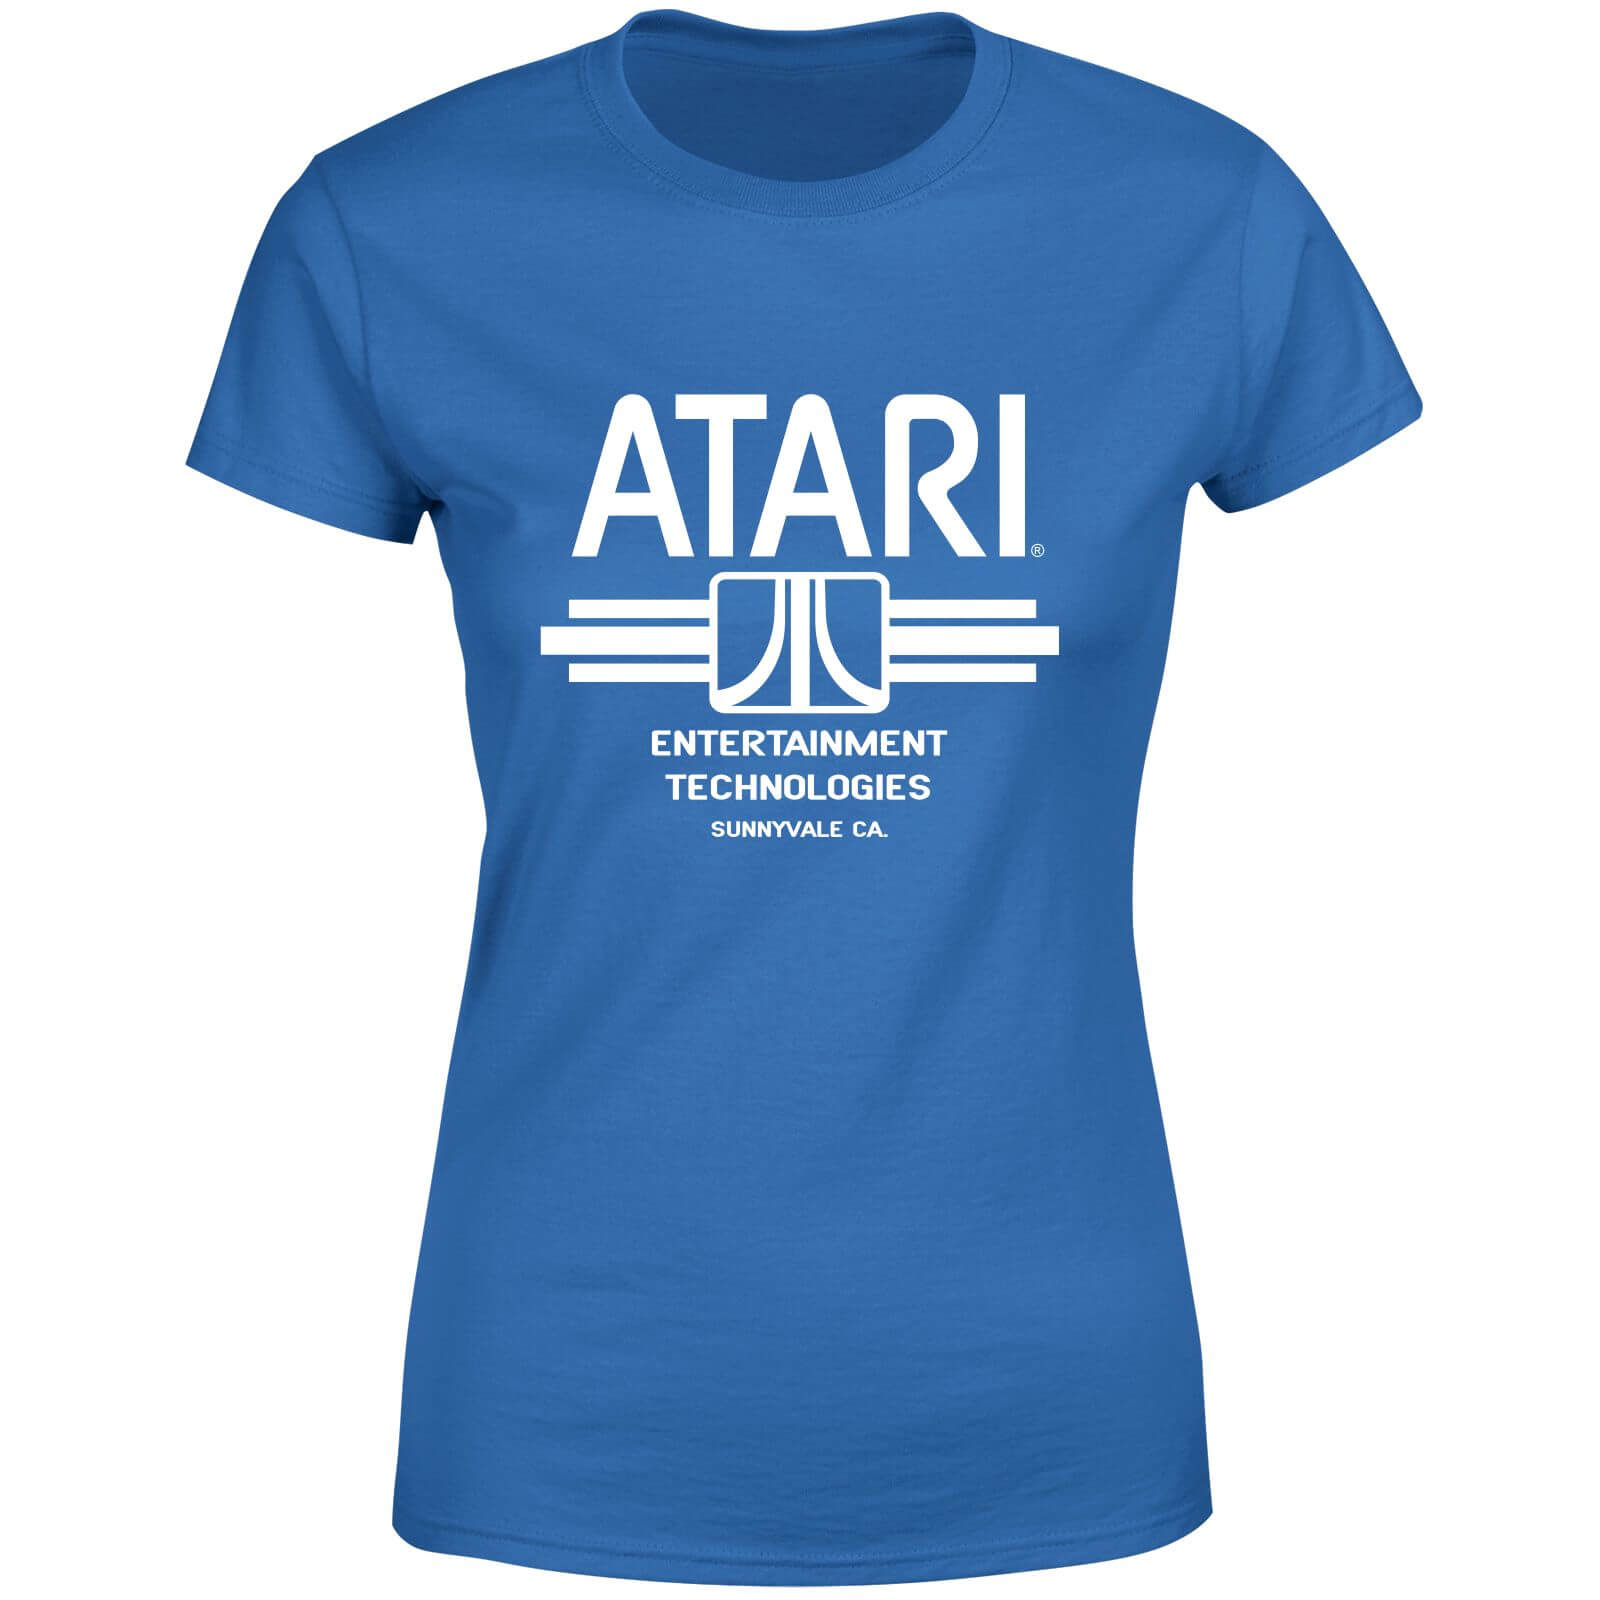 Atari Ent Tech Women's T-Shirt - Blue - XS - Blue